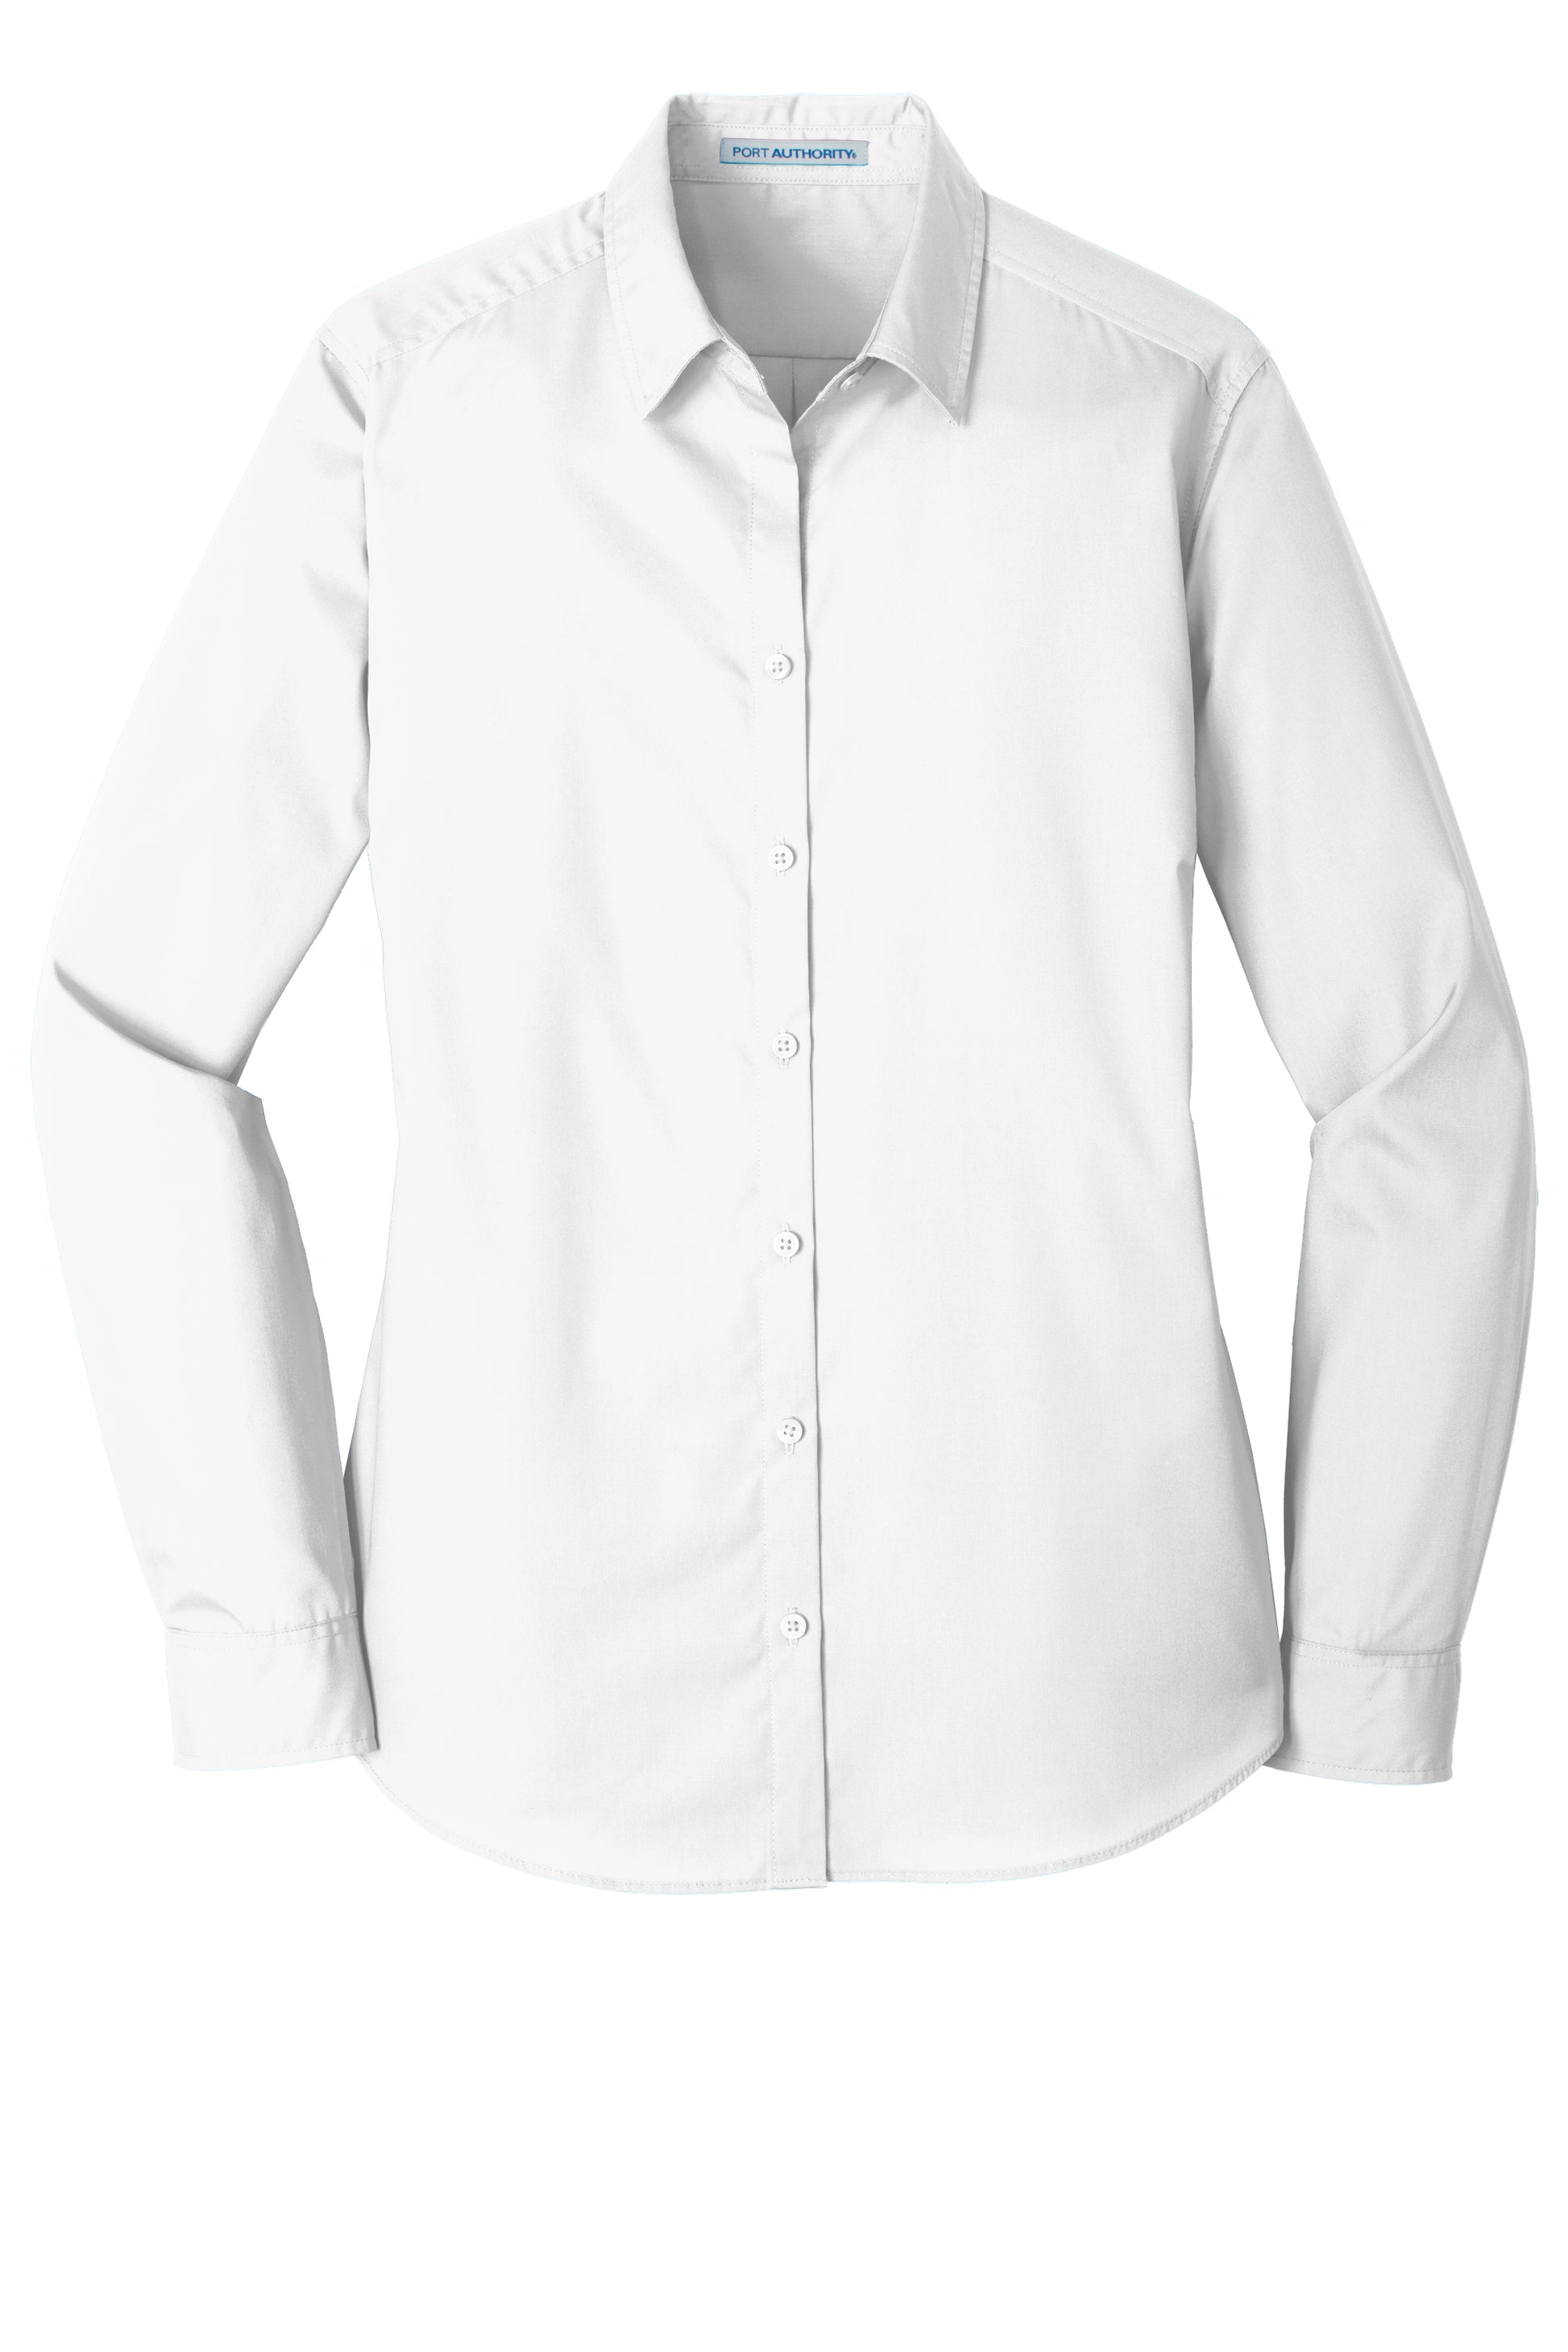 port authority womens long sleeve poplin shirt white